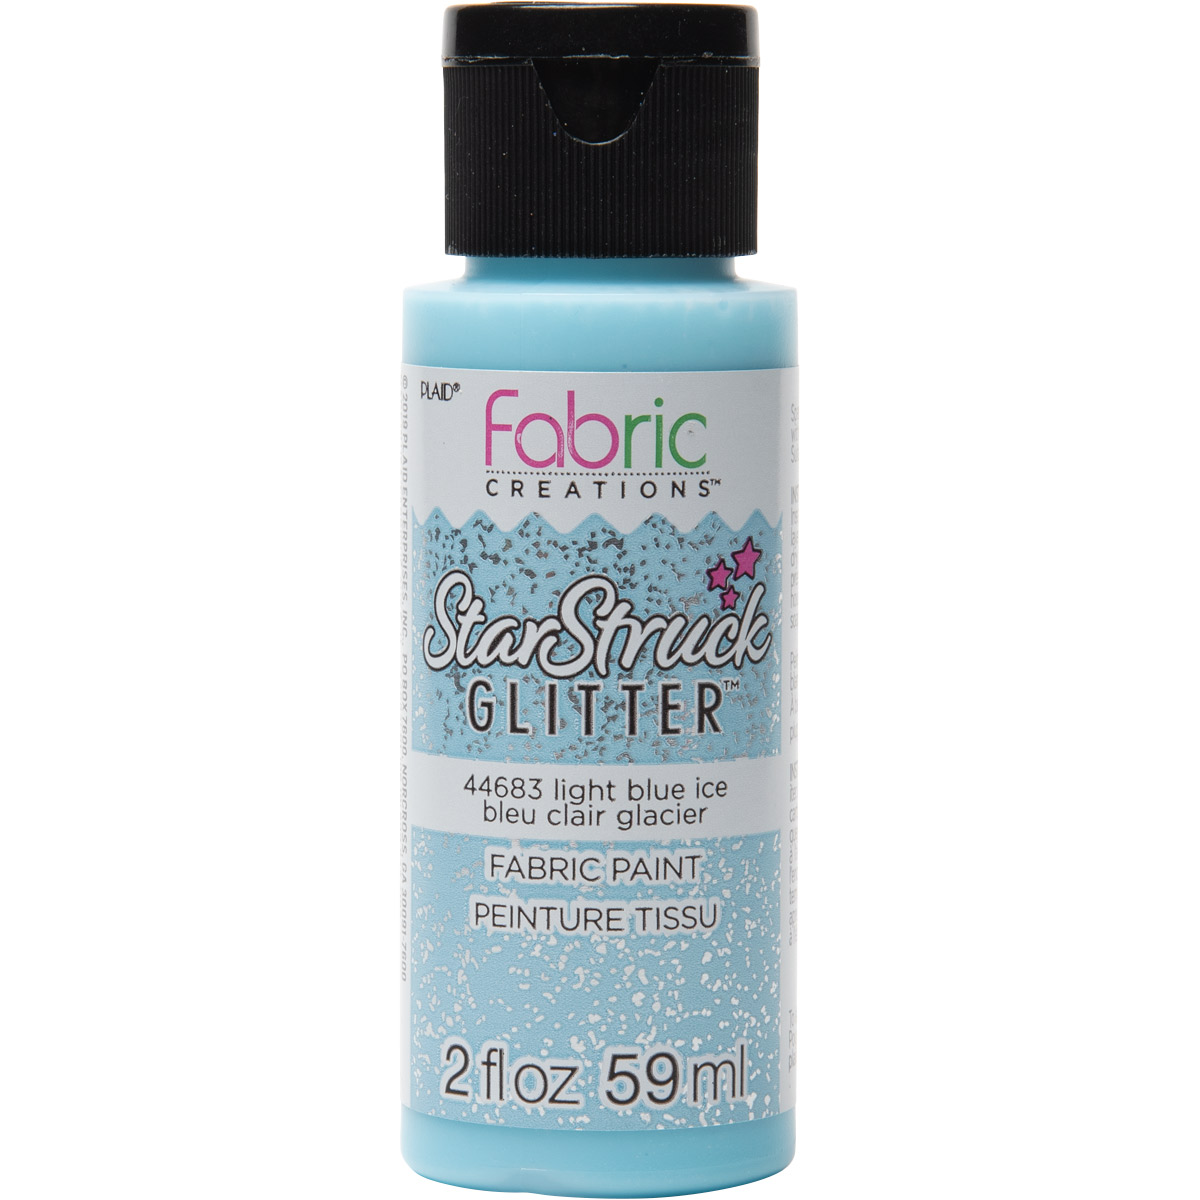 Fabric Creations™ StarStruck Glitter™ Fabric Paint - Light Blue Ice, 2 oz. - 44683